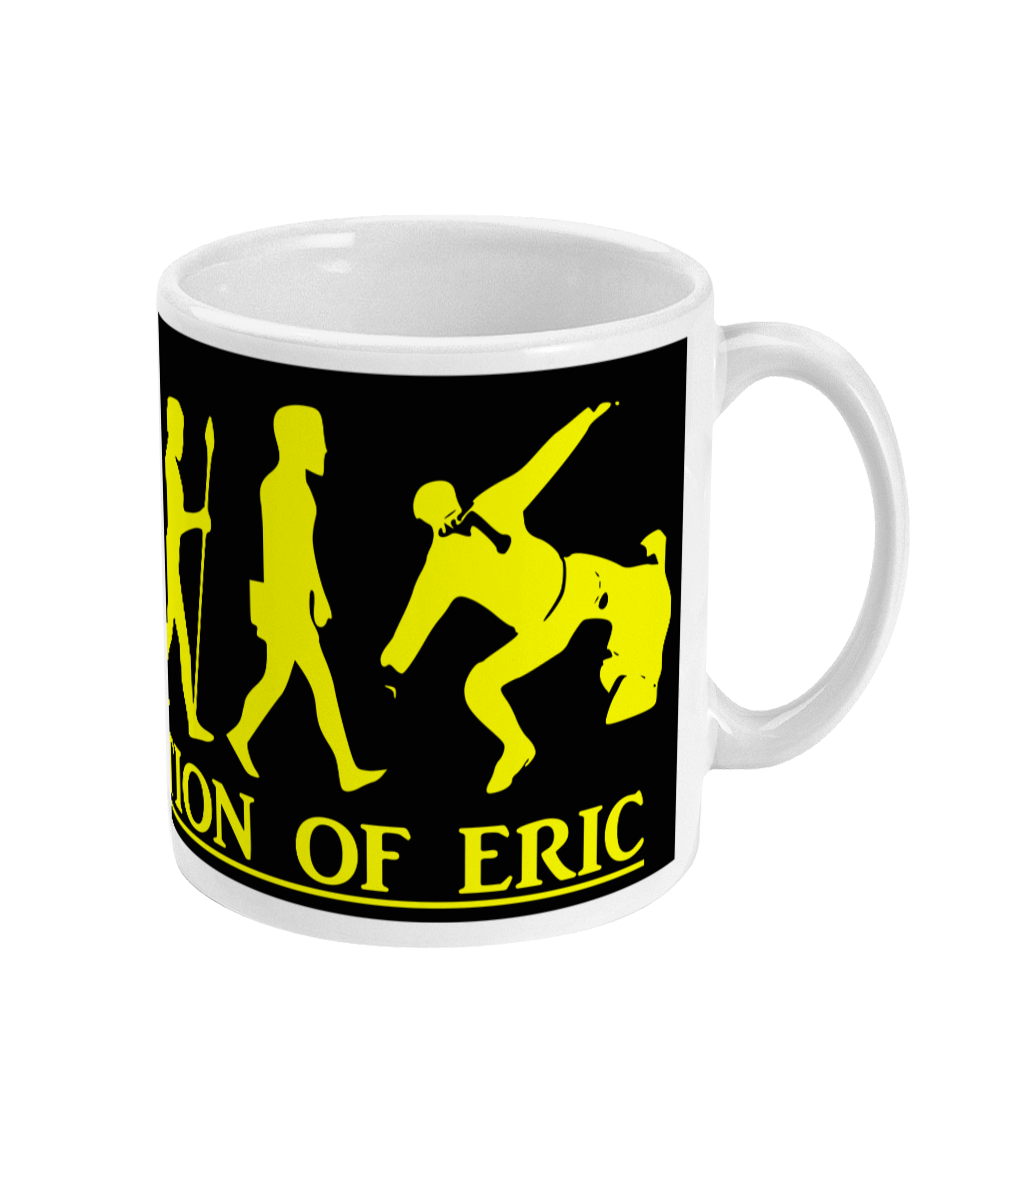 The Evolution of Eric Cantona - Mug